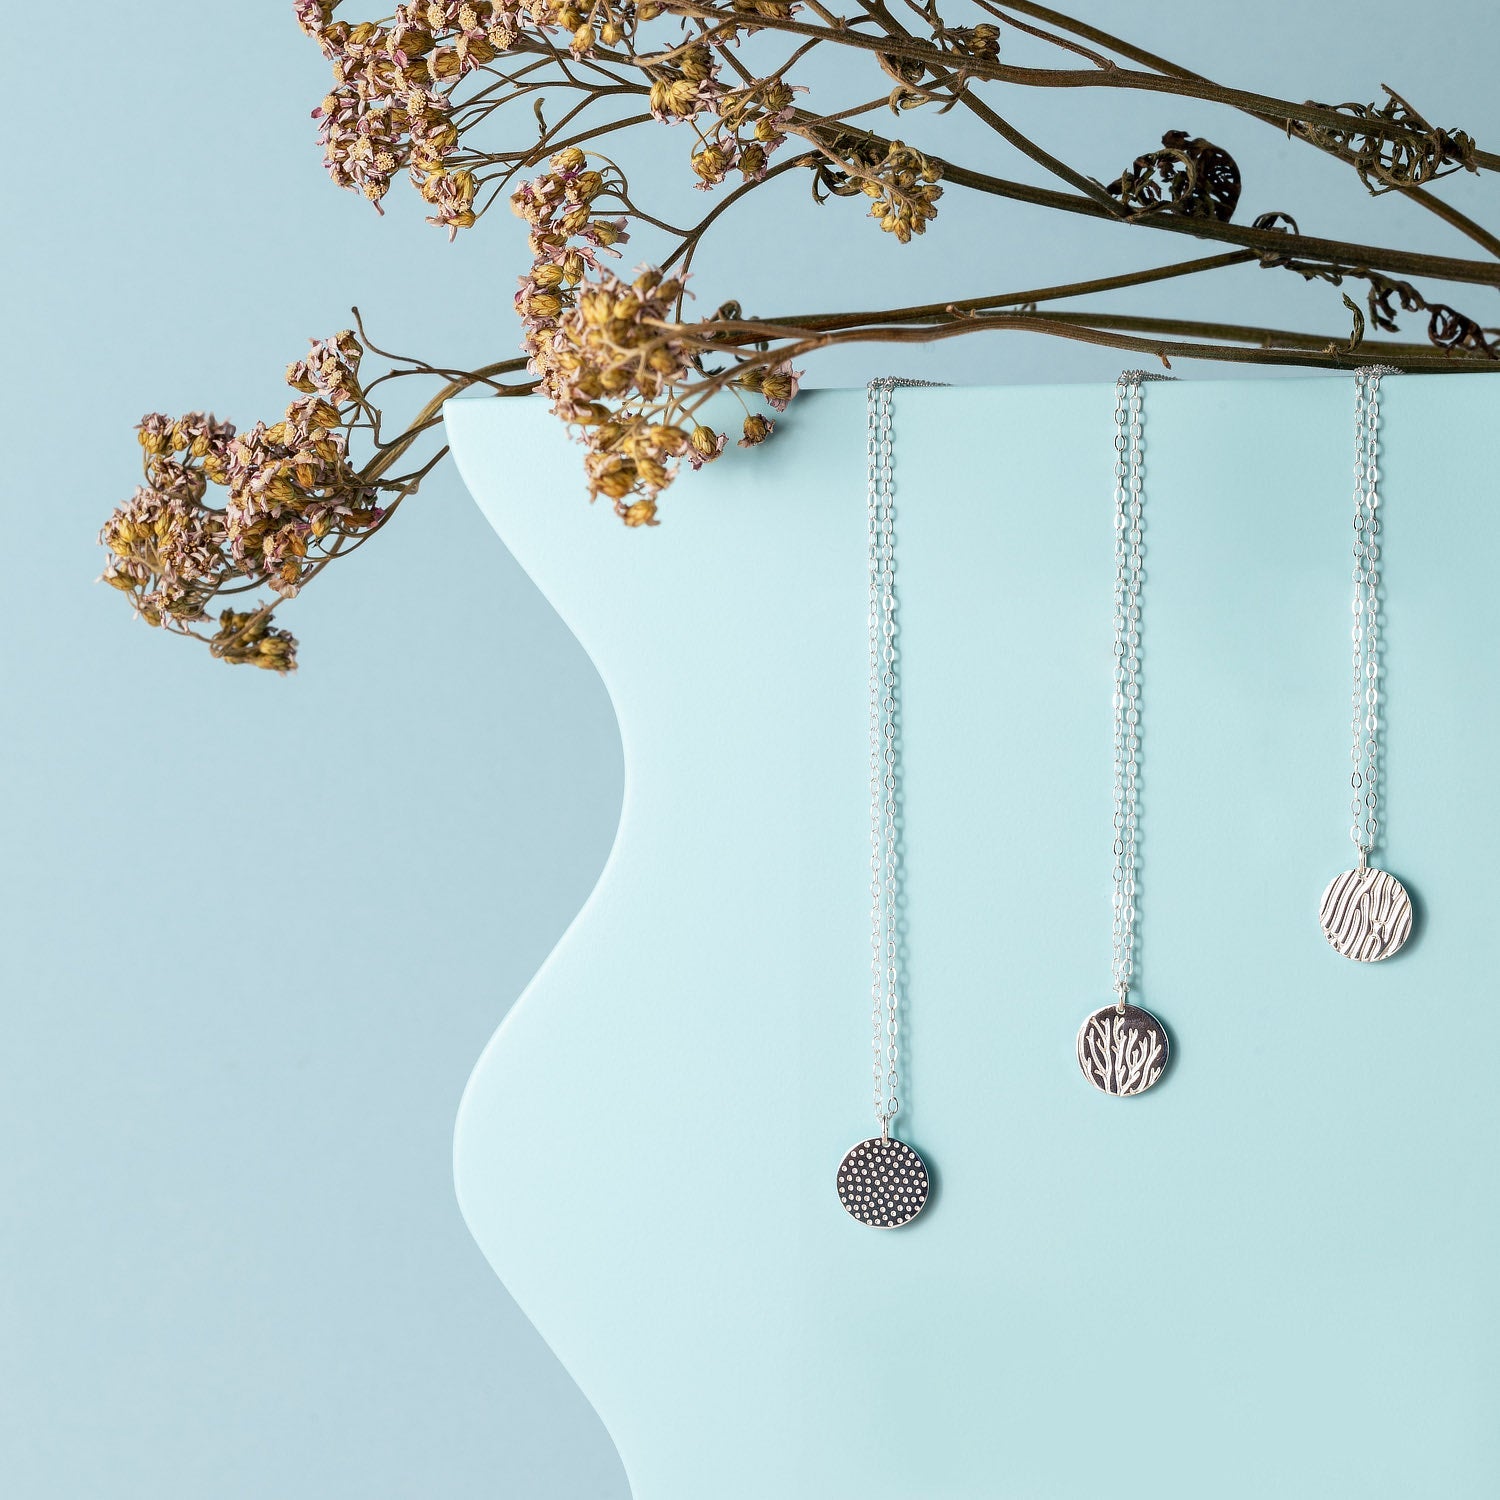 Seagrass texture silver pendant necklace - Simone Walsh Jewellery Australia